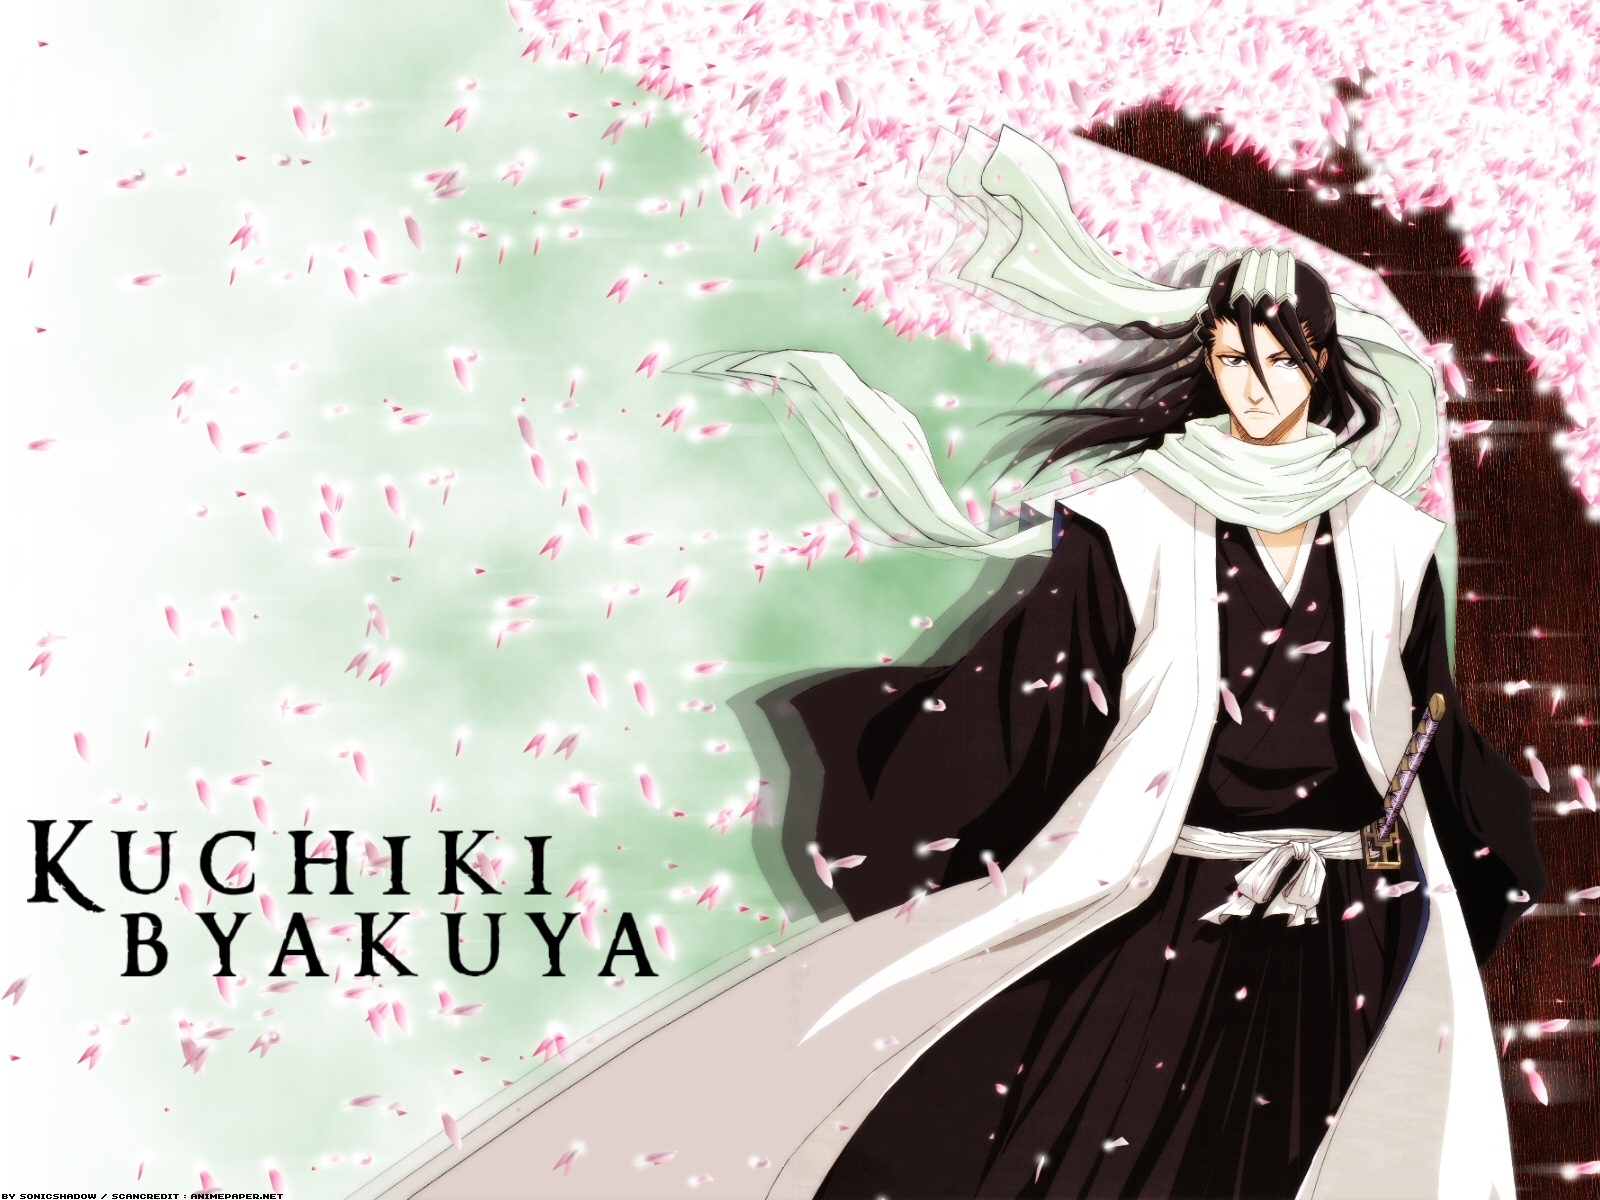 Kuchiki Byakuya Image HD Wallpaper And Background Photos